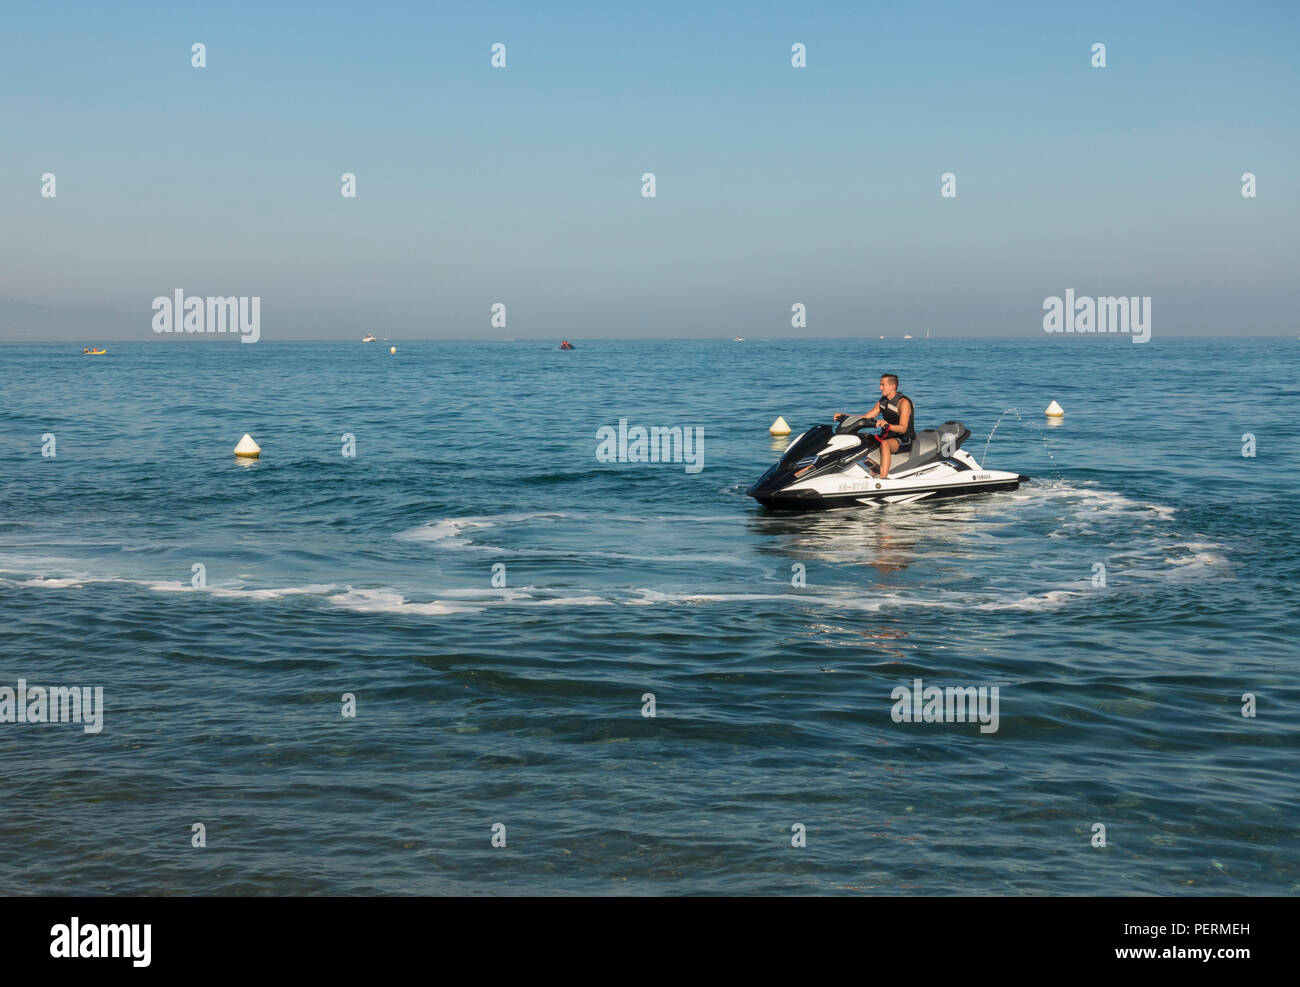 Jet ski being prepared at mediterranean sea, San Pedro, Marbella, Spain. Stock Photo